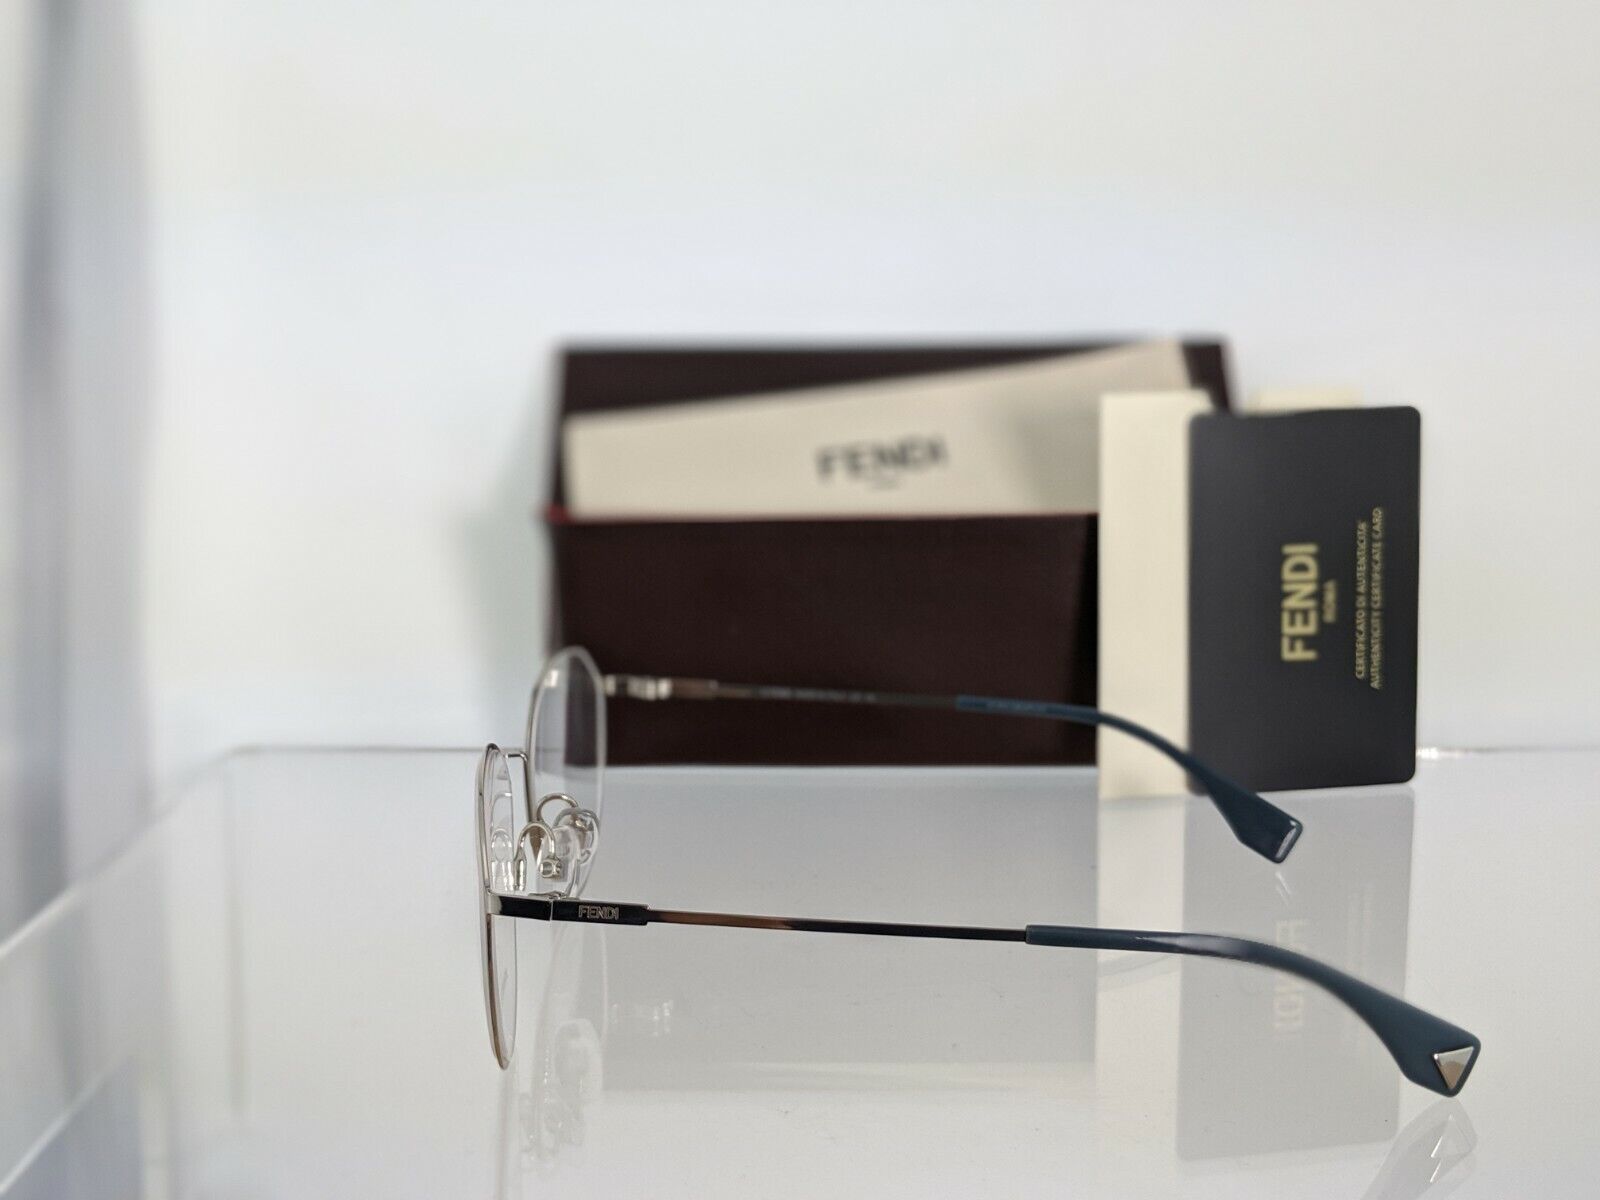 Brand New Authentic Fendi FF 0340/F Eyeglasses 3YG Silver 53mm Frame FF0340